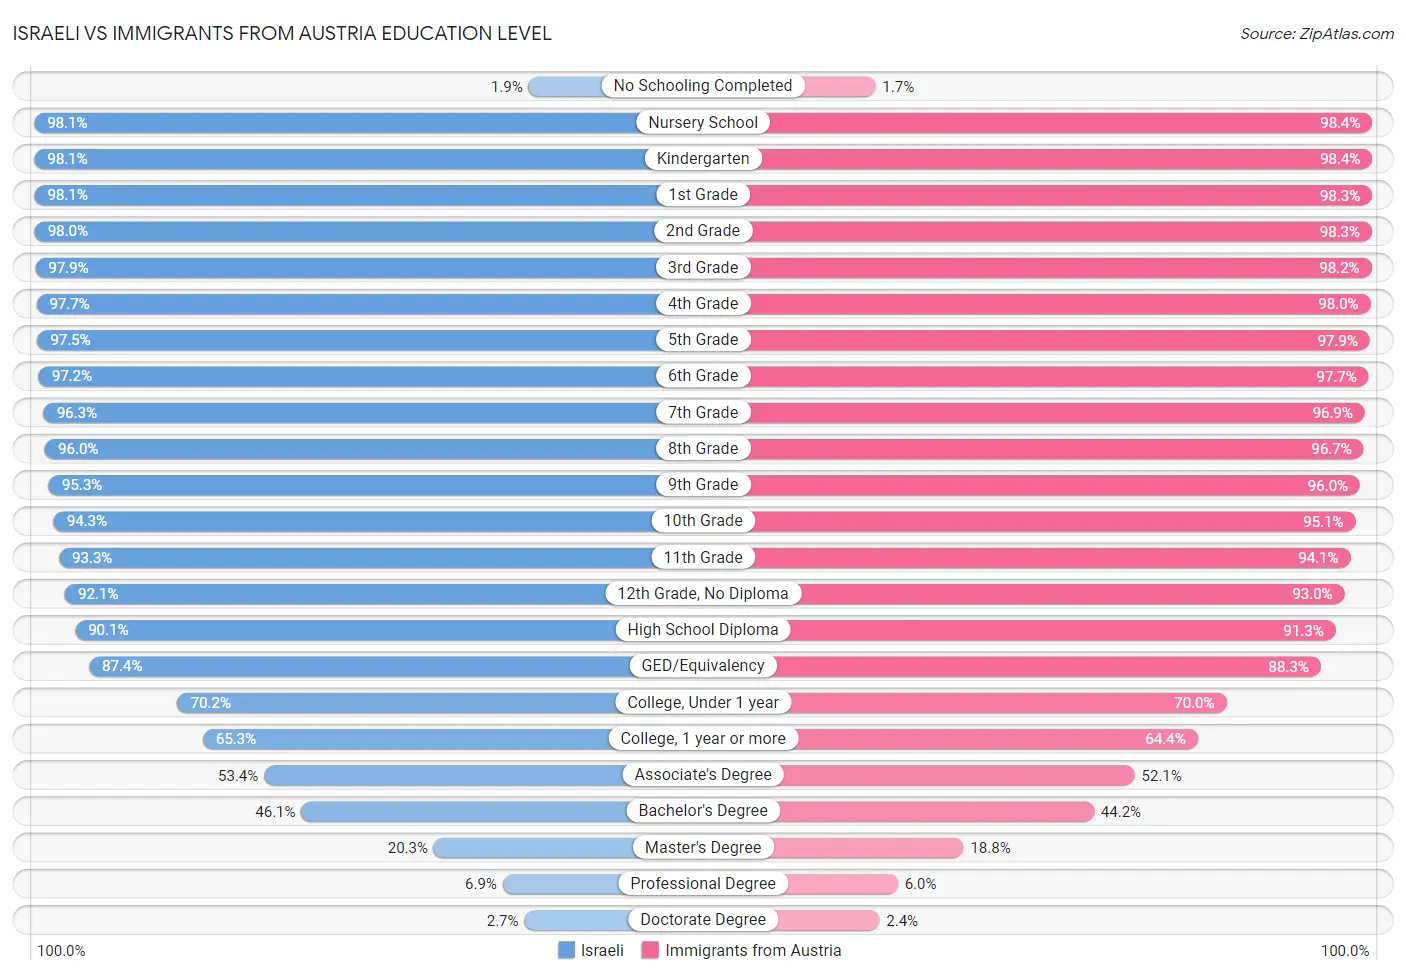 Israeli vs Immigrants from Austria Education Level